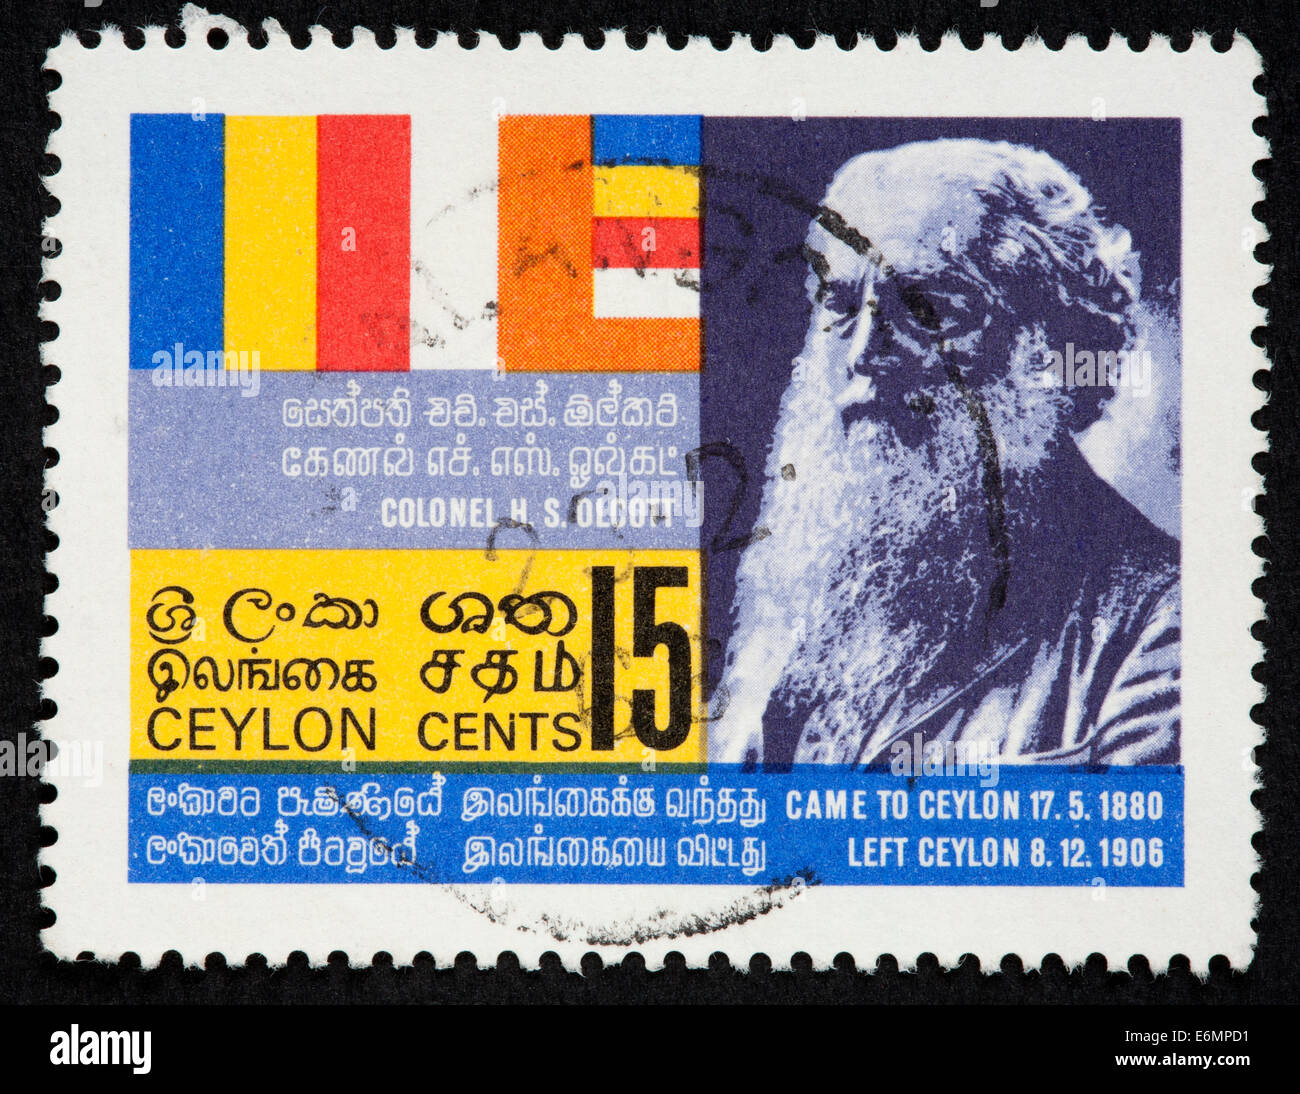 Ceylon postage stamp Stock Photo